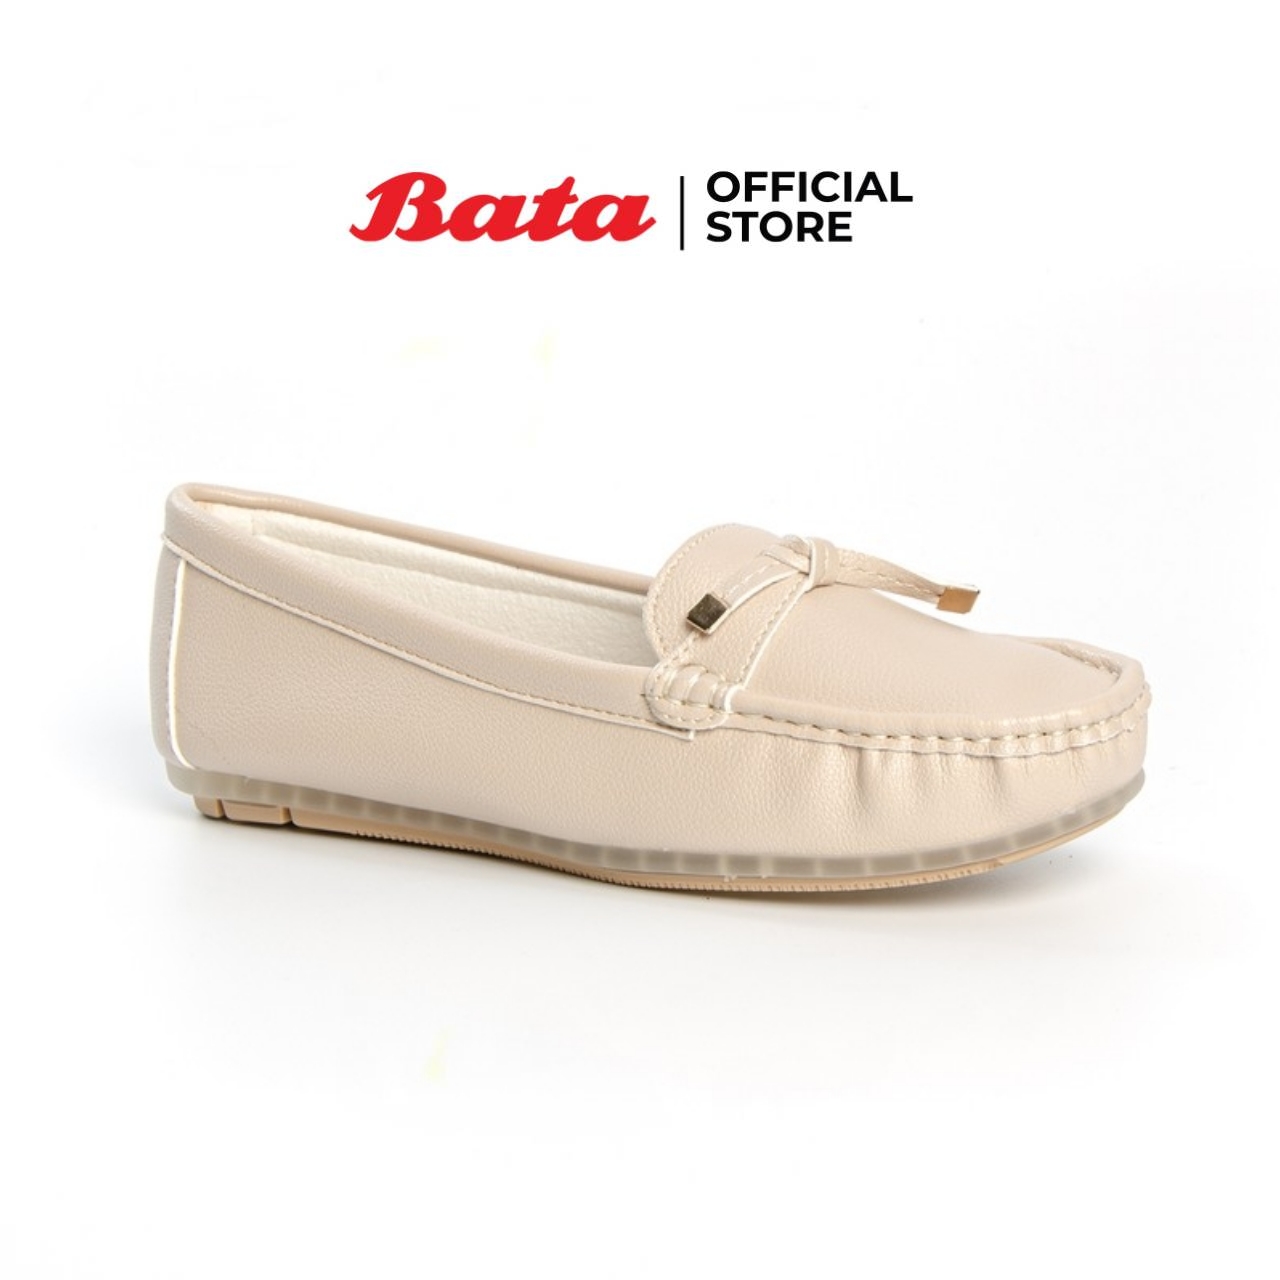 Bata LADIES CASUAL MOCCASINE รองเท้าคัทชู ส้นแบน รองเท้าลำลอง แฟชั่นหญิง แบบสวม สีเบจ รหัส 5519142 Ladiesflat B8 WFS